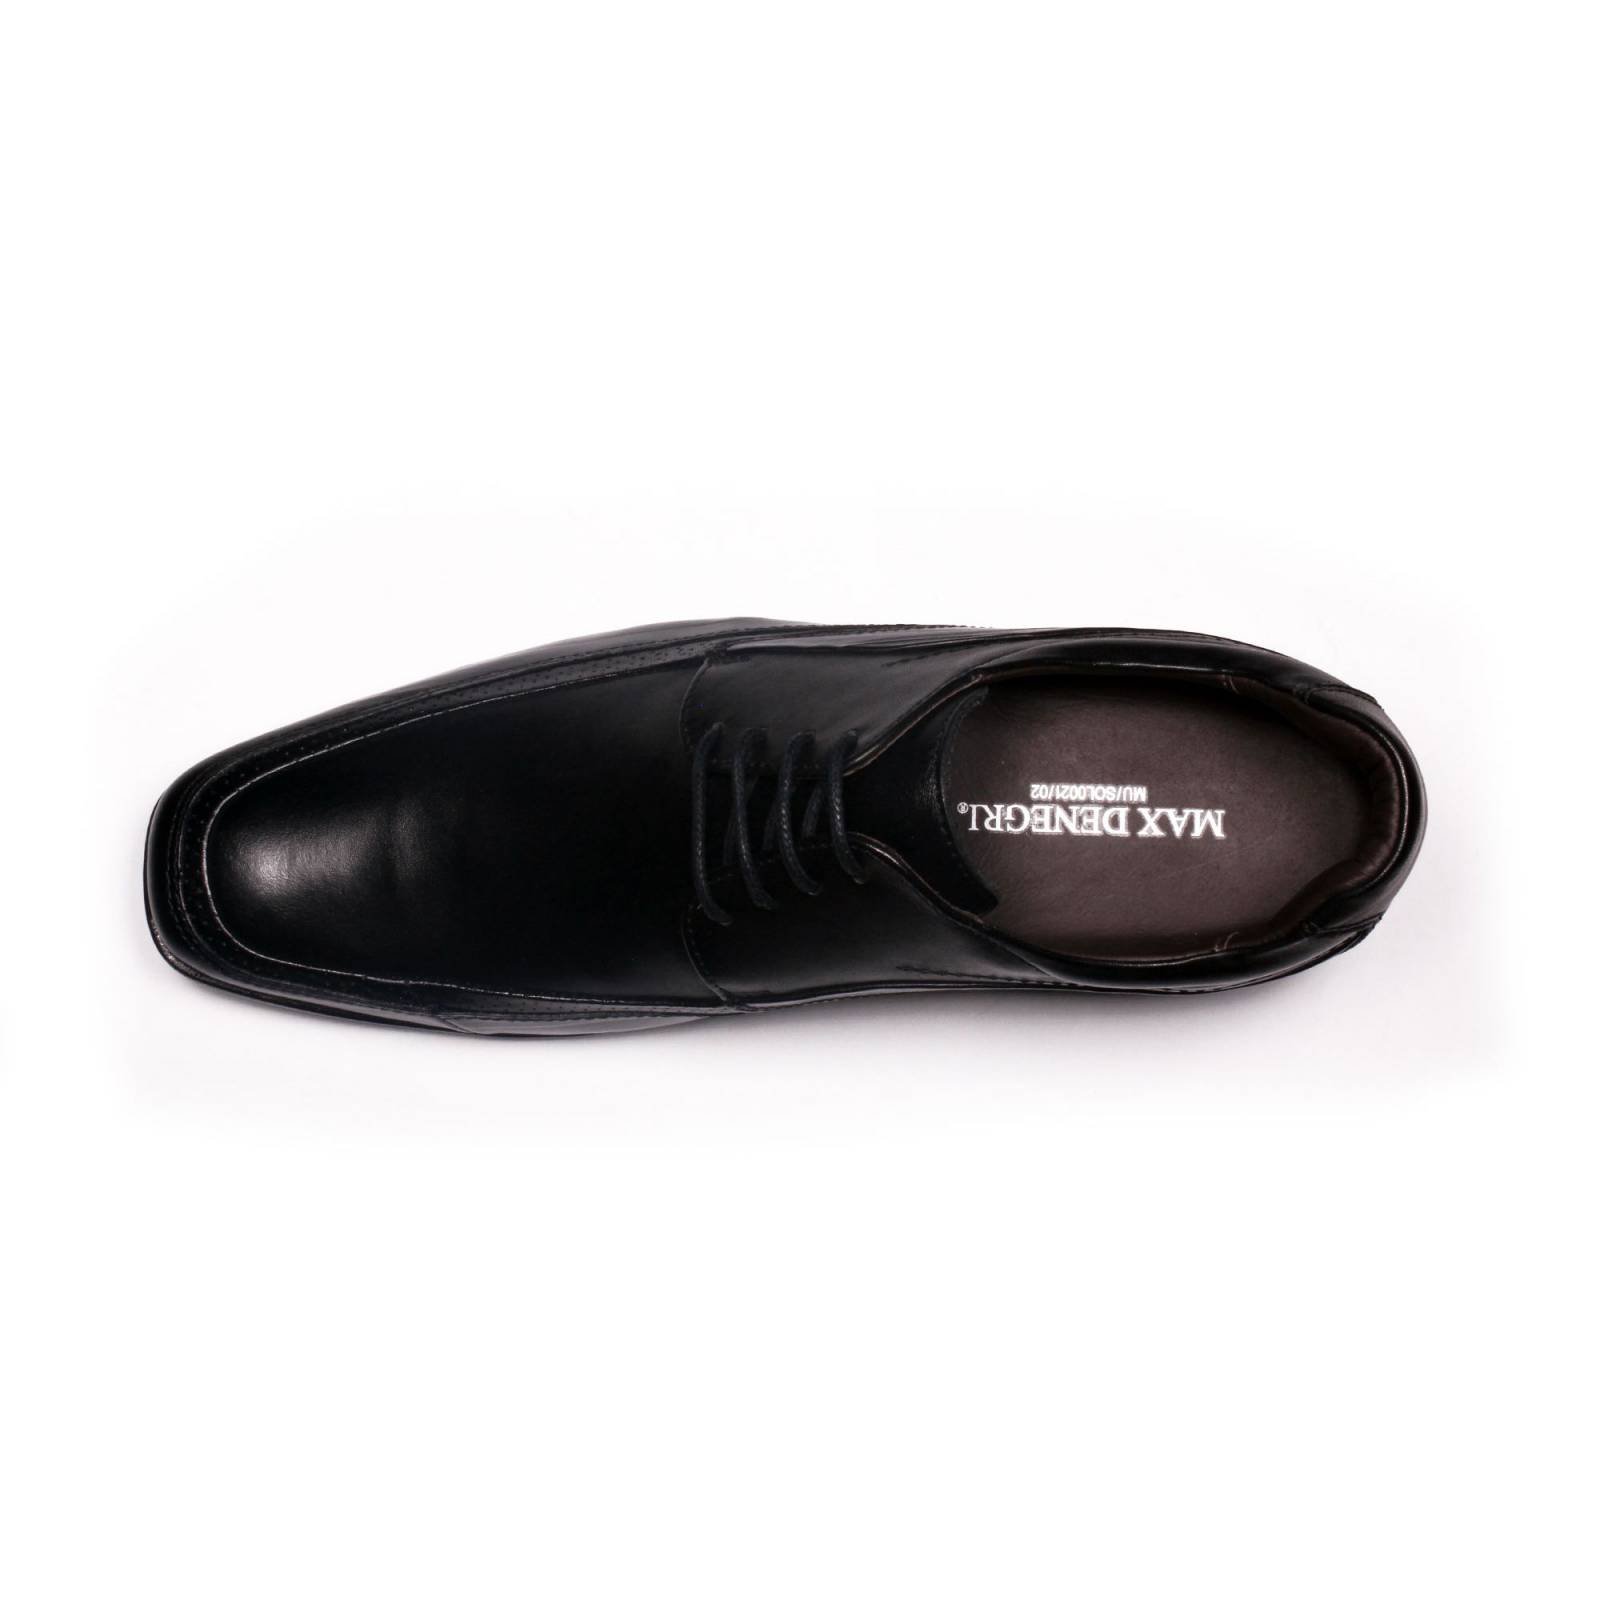 Zapato Formal Manager Negro Max Denegri +7cms De Altura